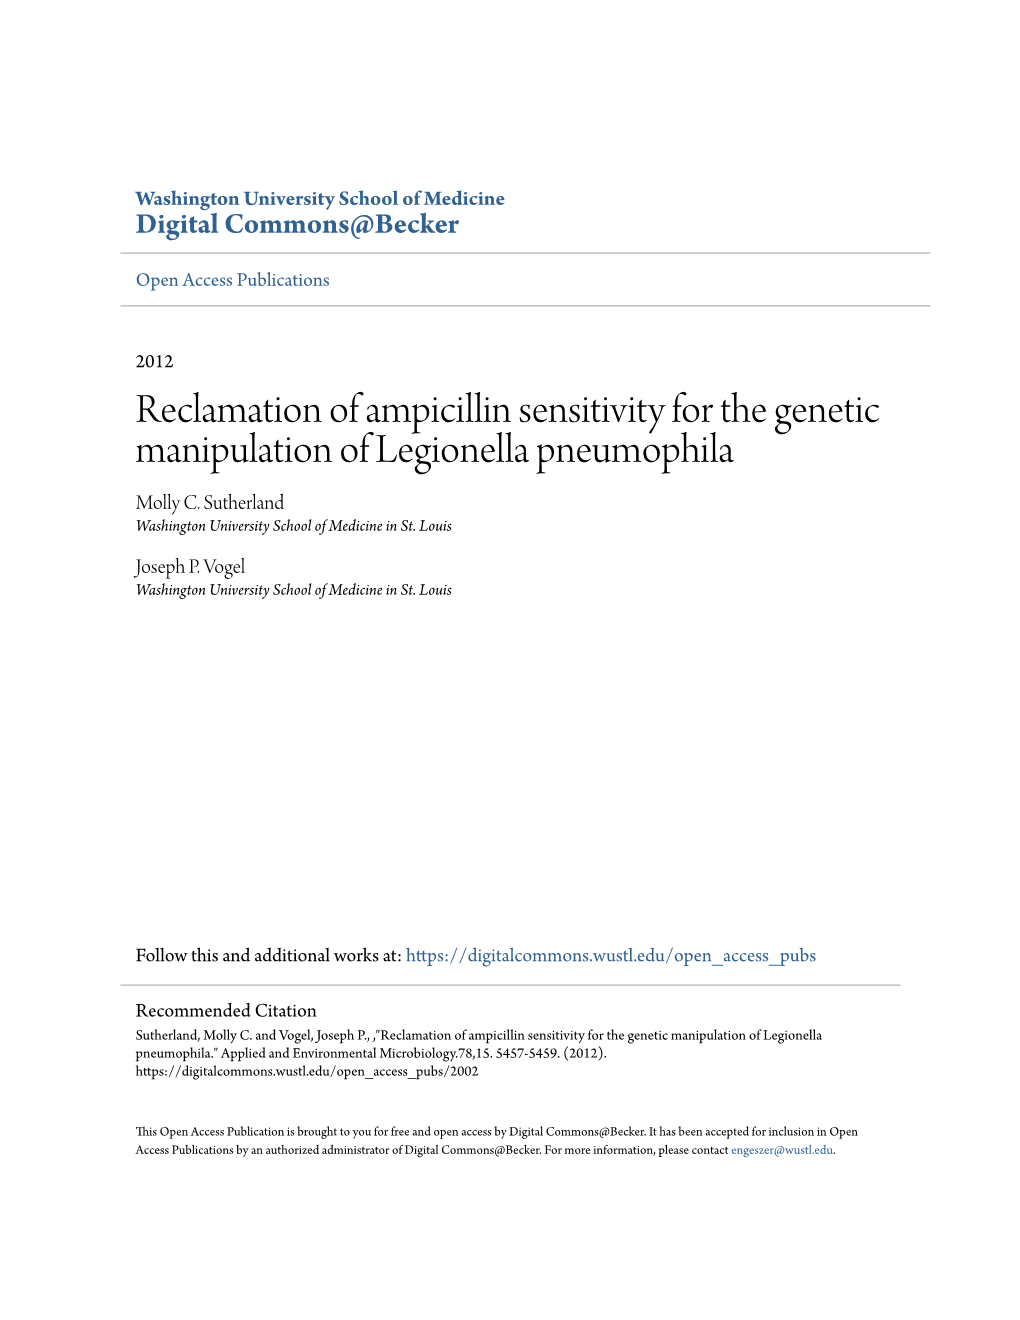 Reclamation of Ampicillin Sensitivity for the Genetic Manipulation of Legionella Pneumophila Molly C